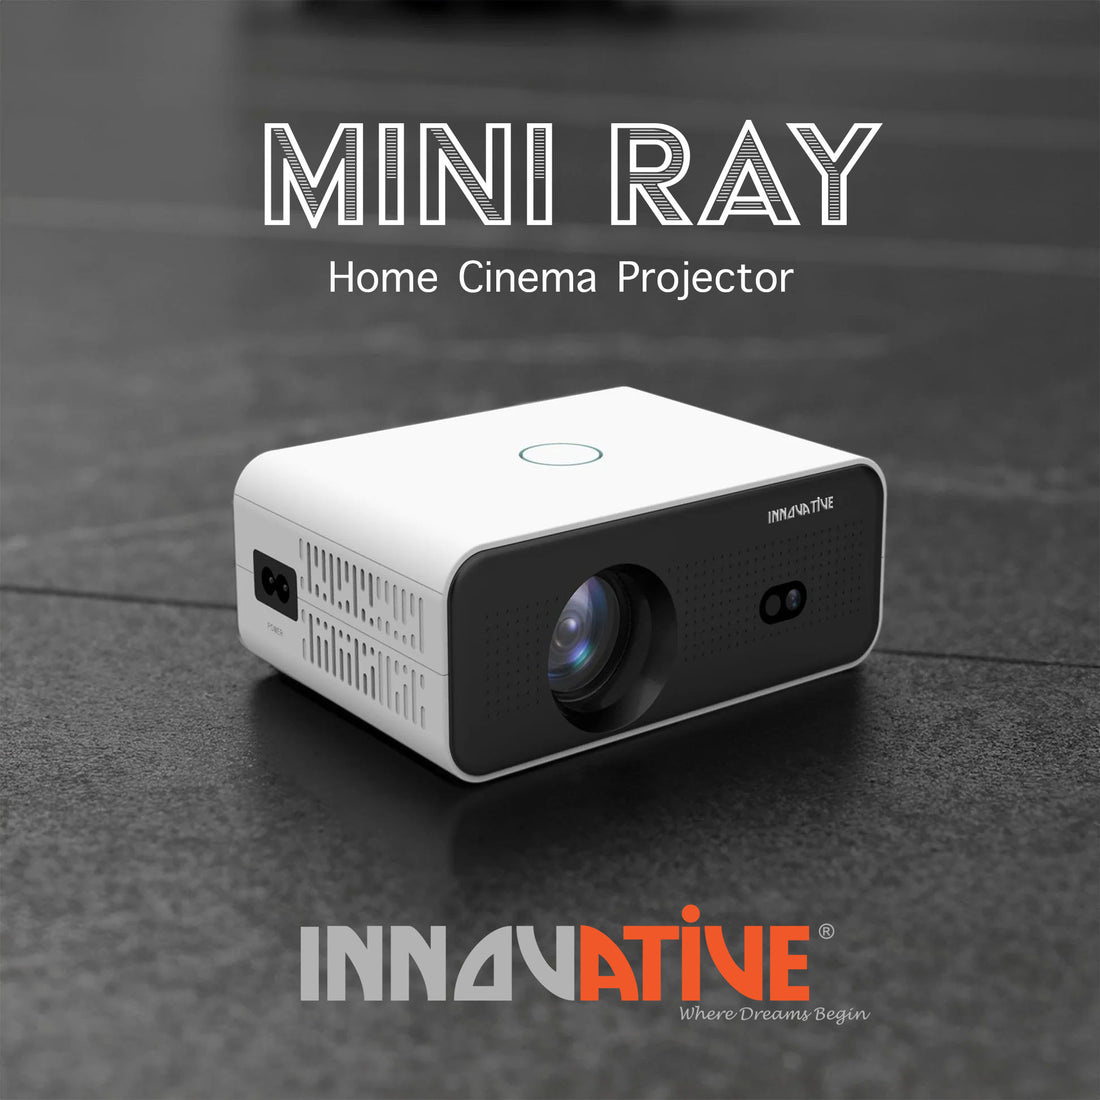 Projector - Innovative Mini Ray Home Cinema Projector